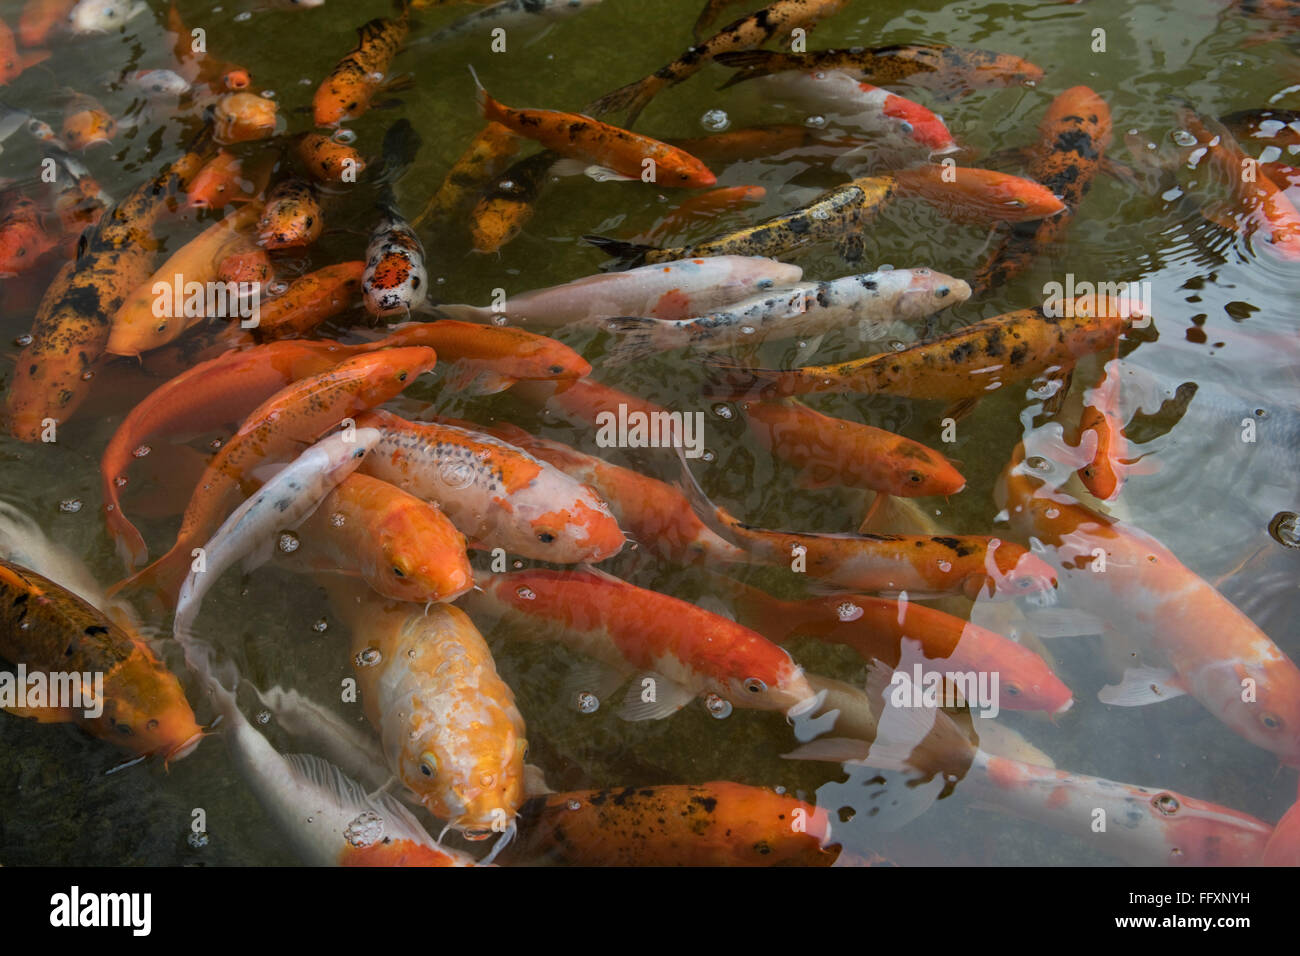 La carpa Koi en un estanque ornamental, Bangkok, Tailandia Foto de stock